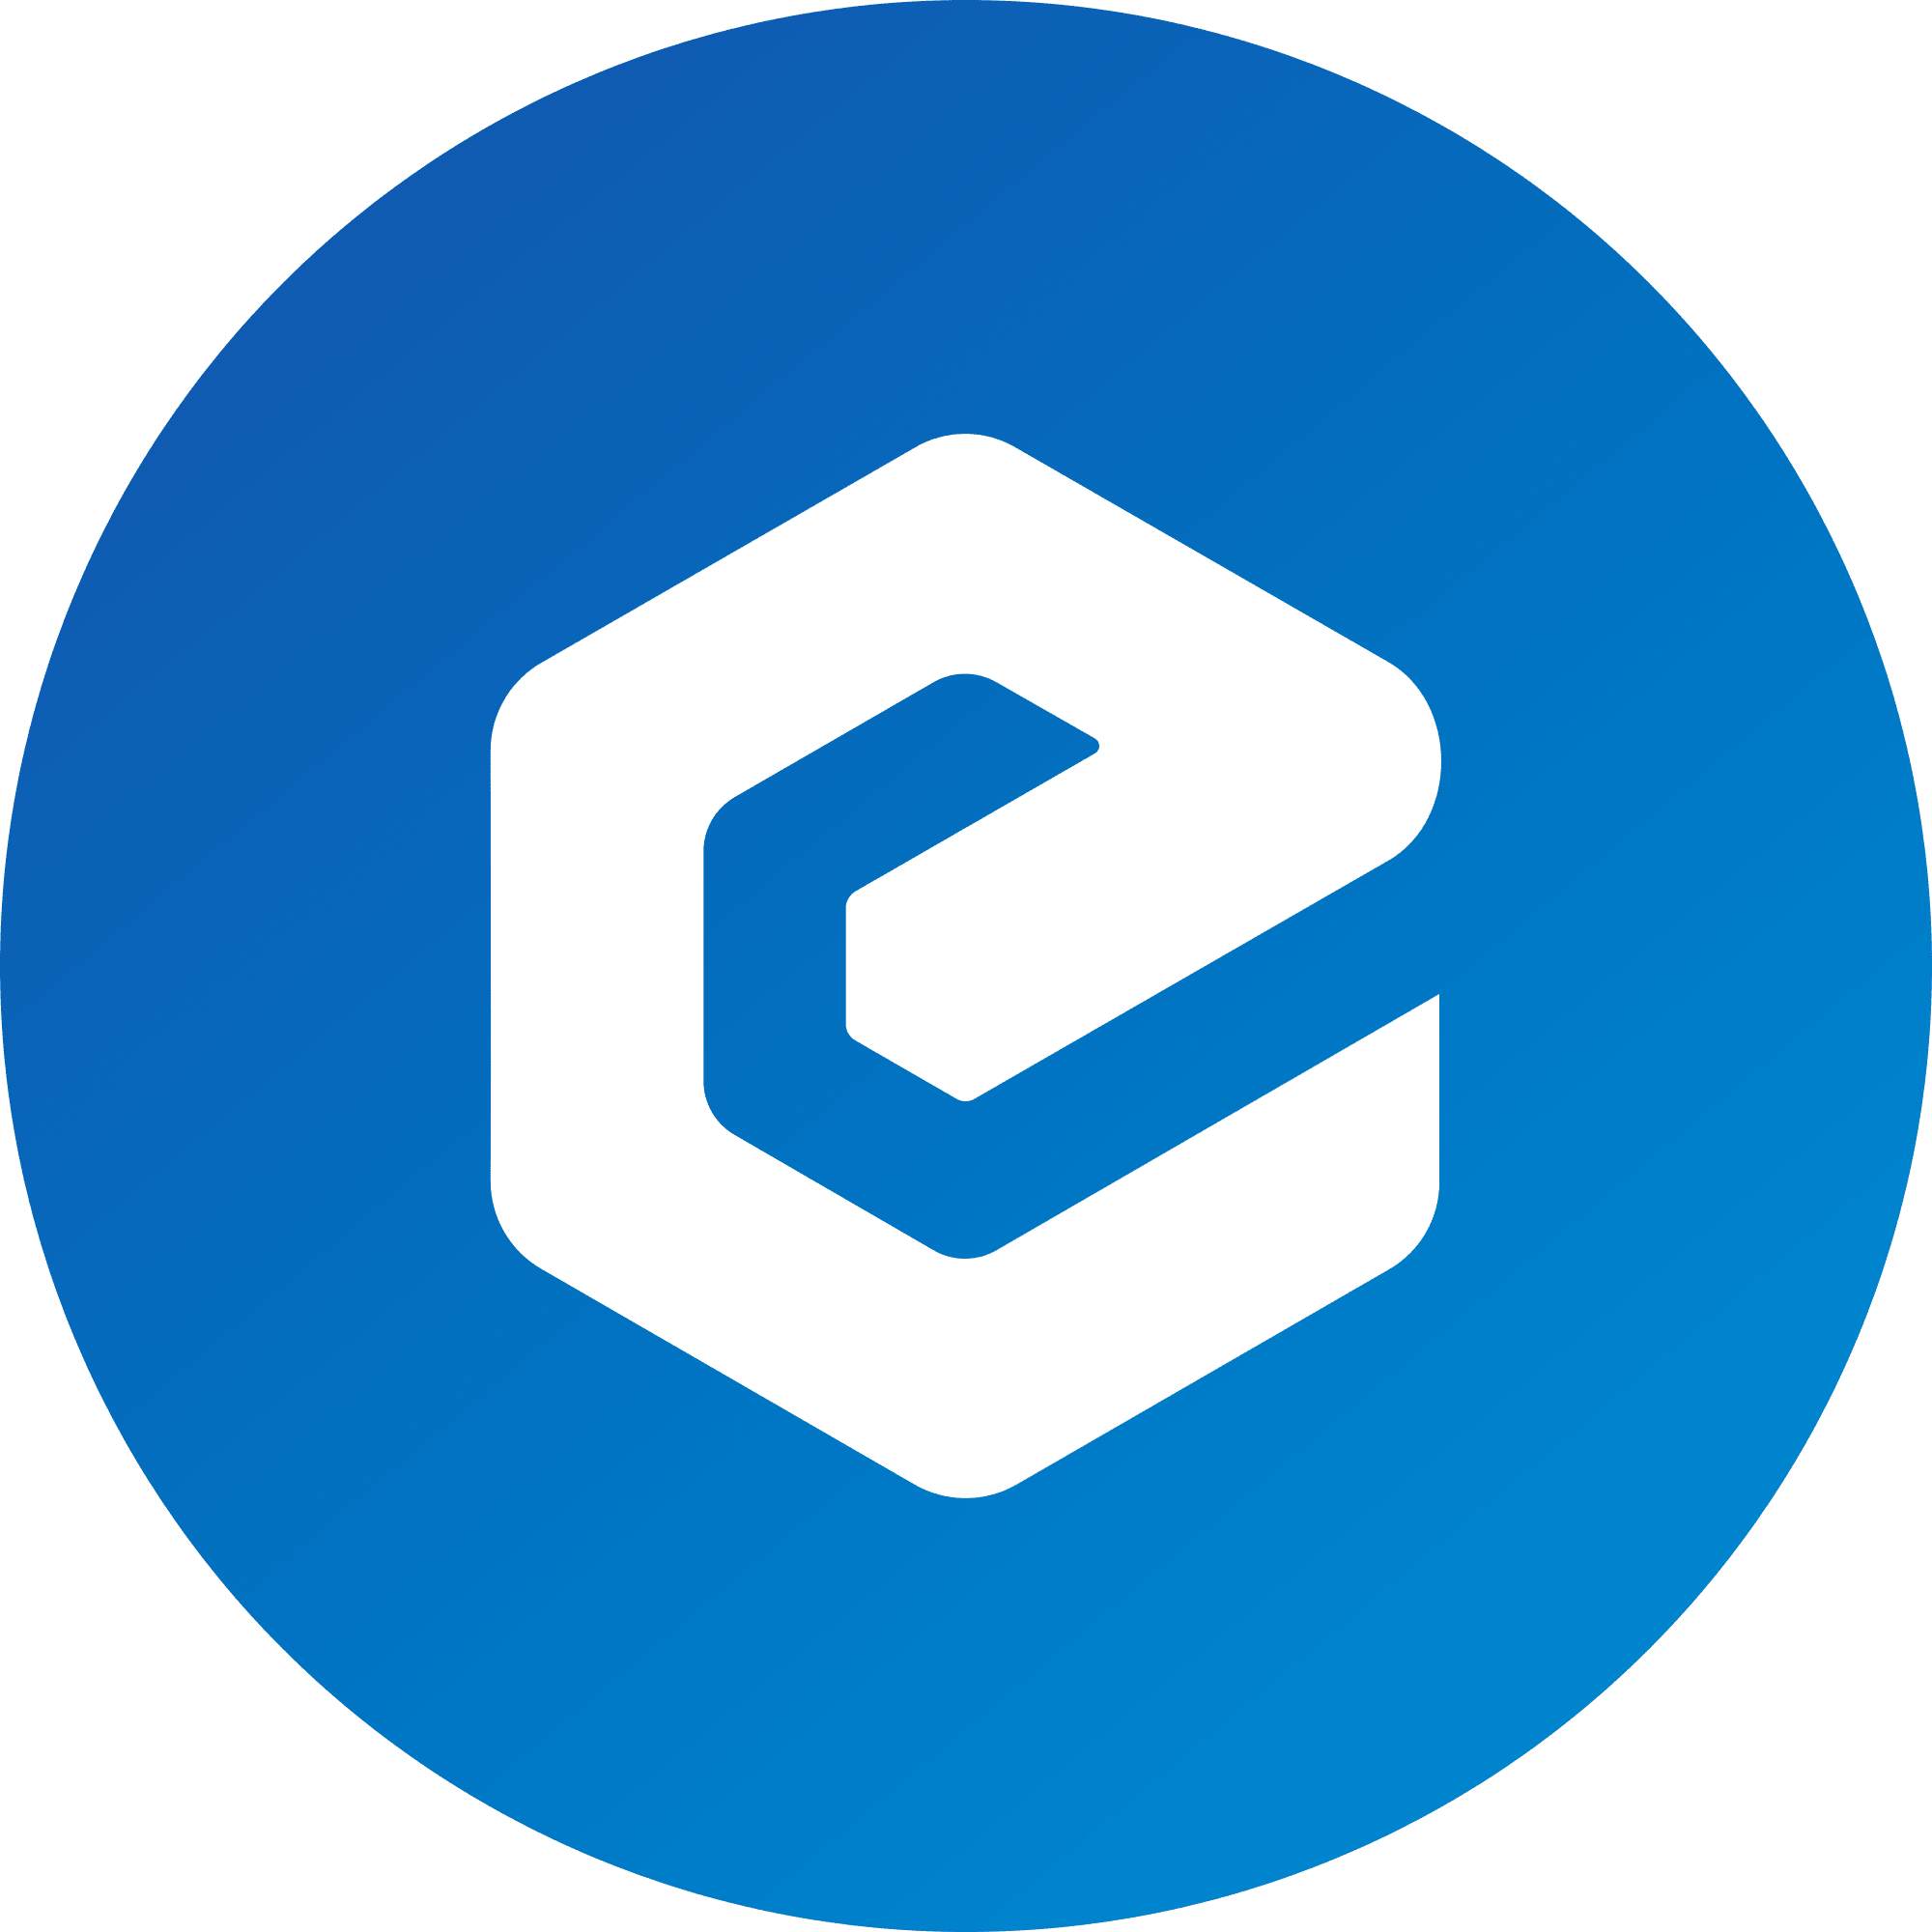 eCash logo in png format